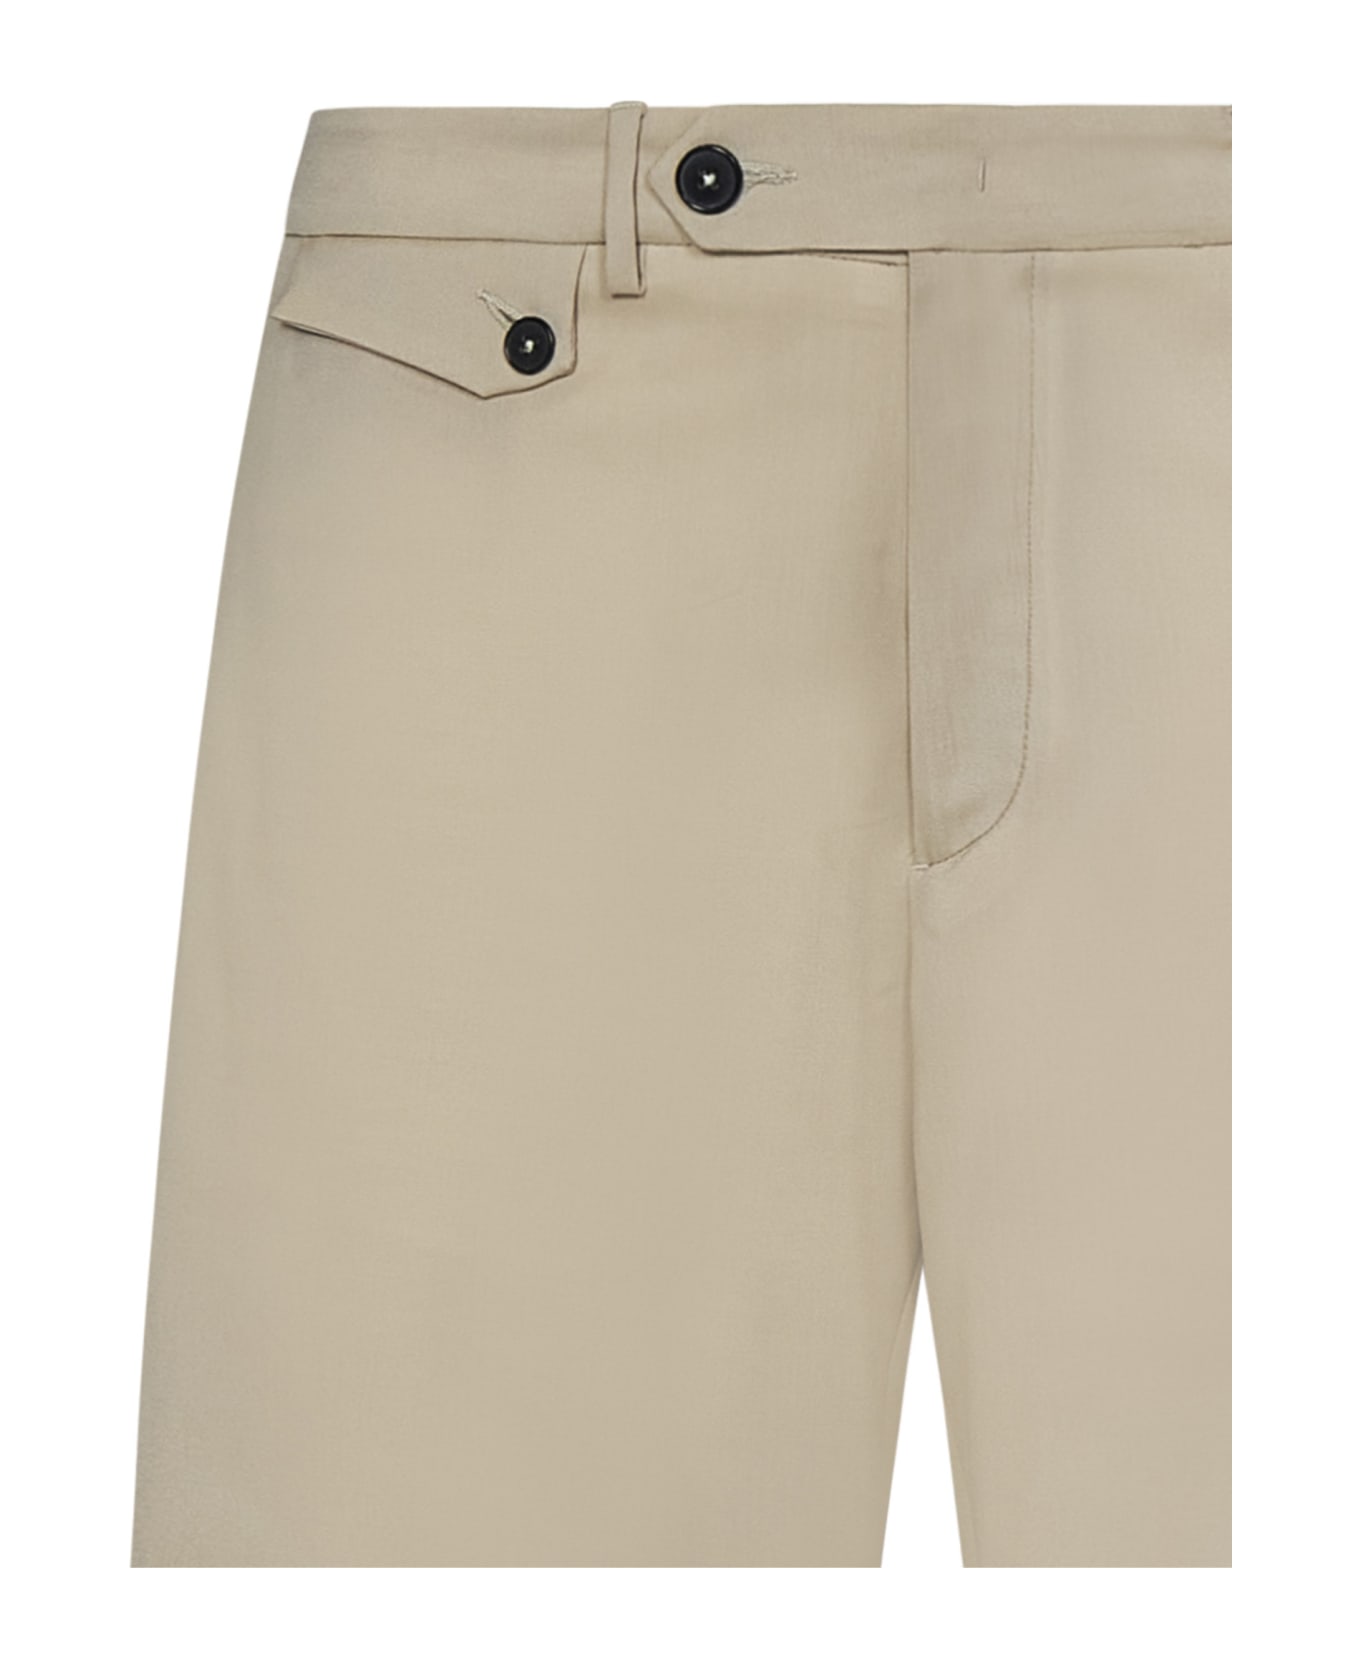 Low Brand Cooper Pocket Shorts - Beige